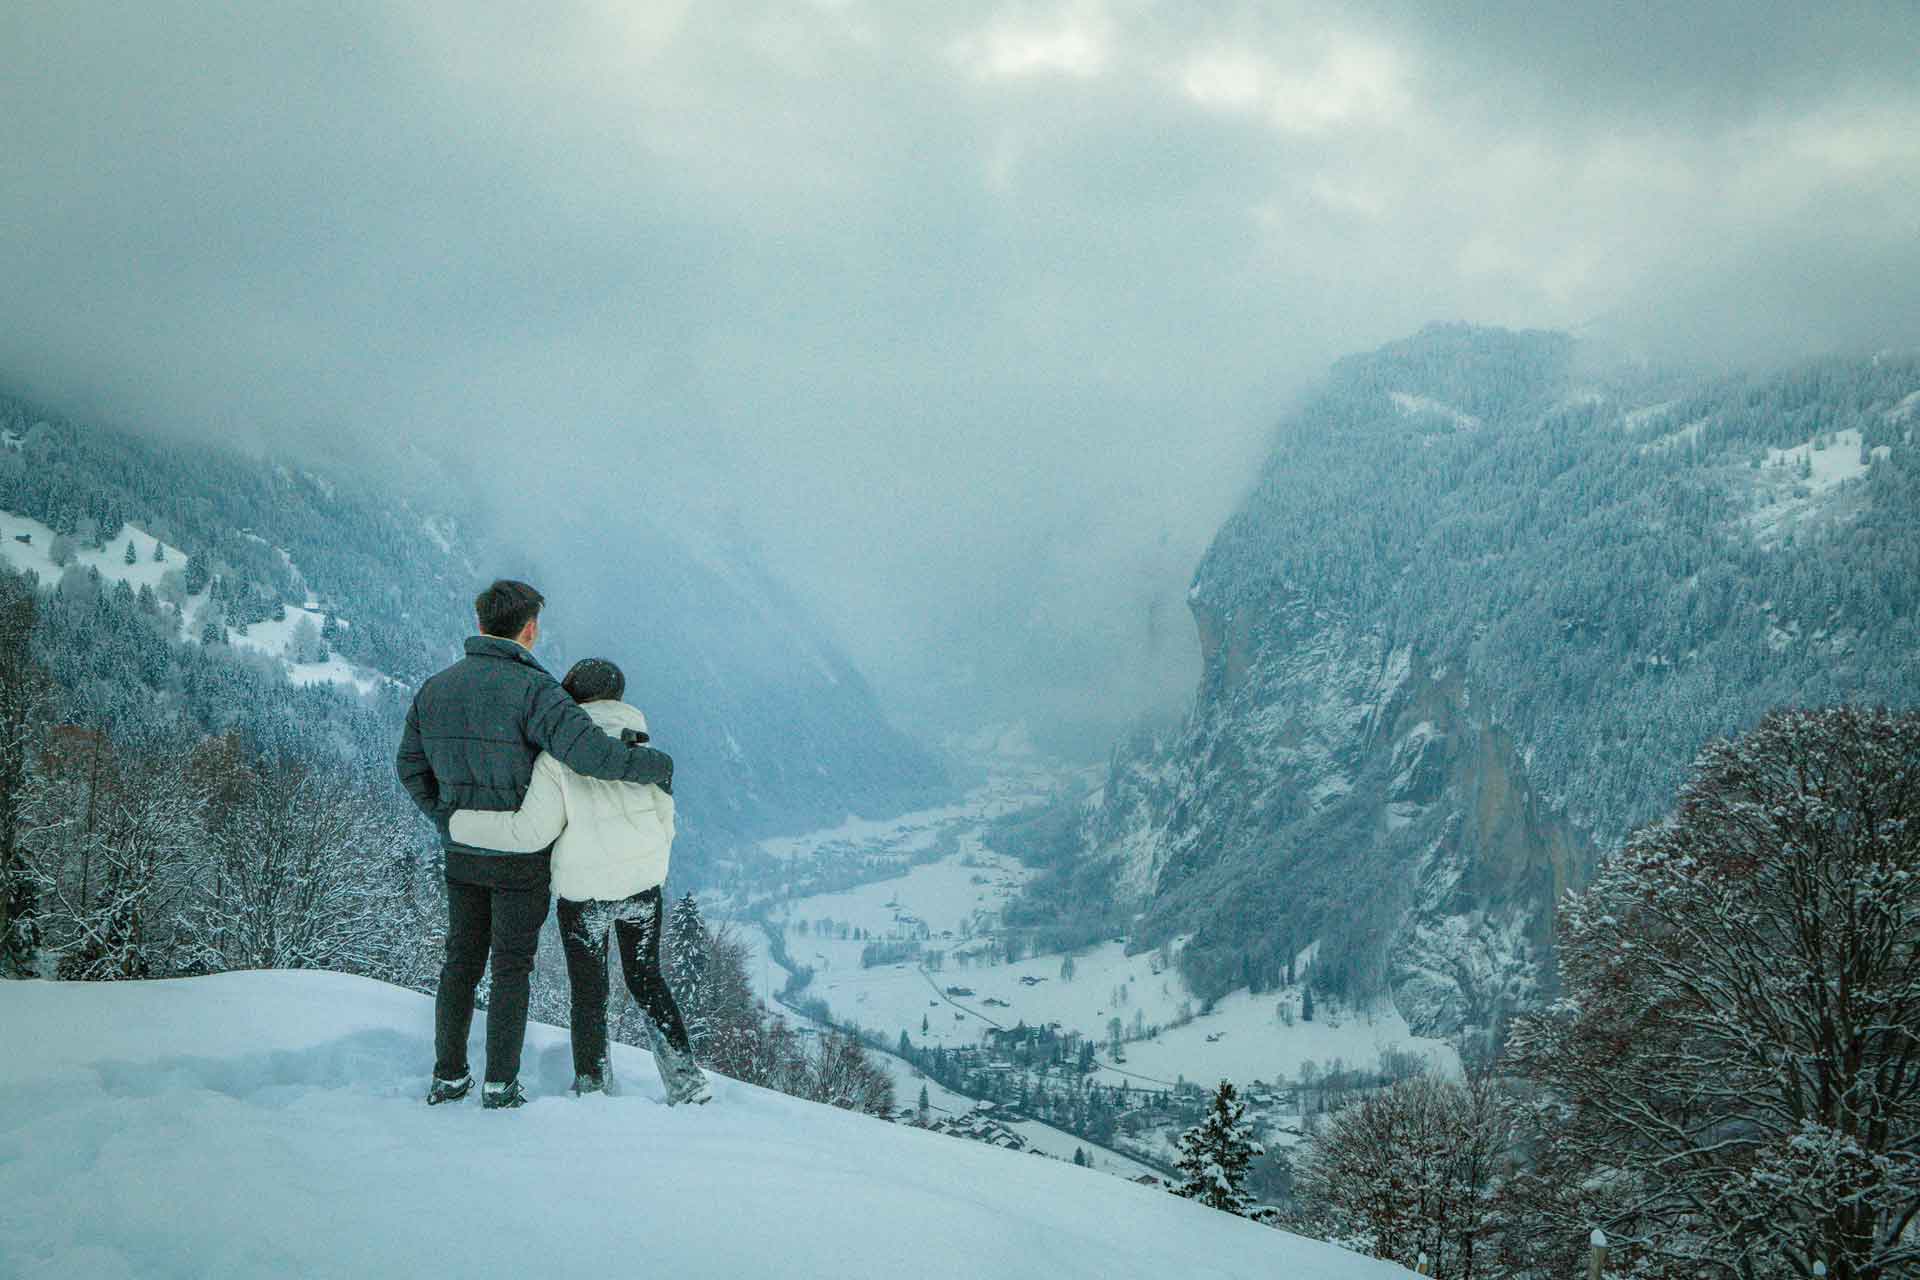 Photographer Lauterbrunnen Surprise Engagement In The Snow